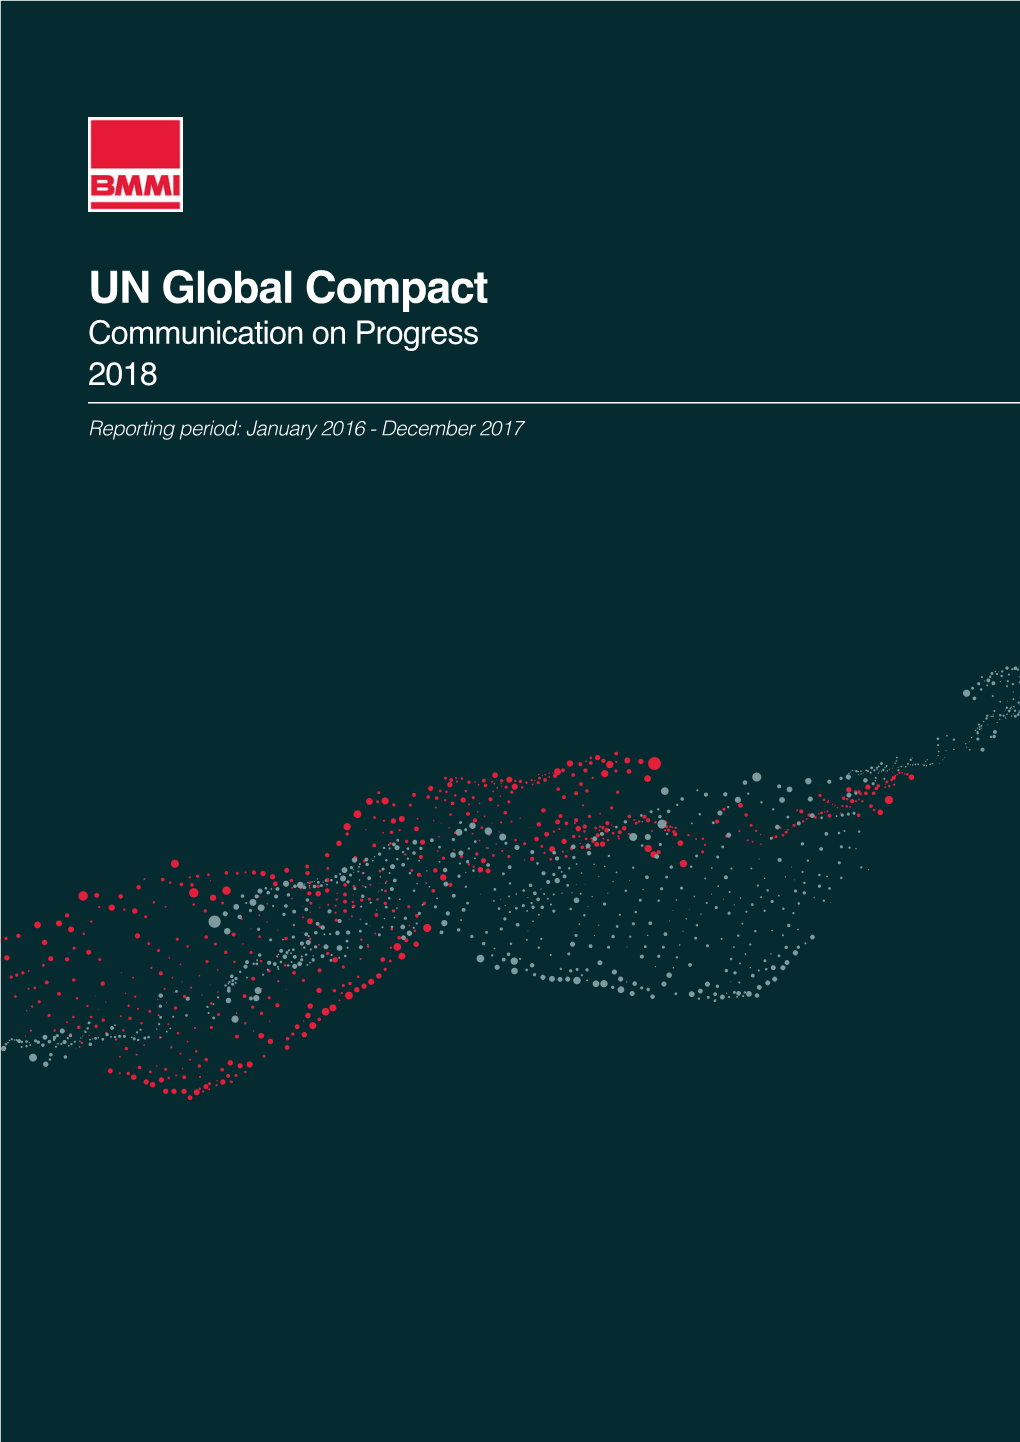 UN Global Compact Communication on Progress 2018